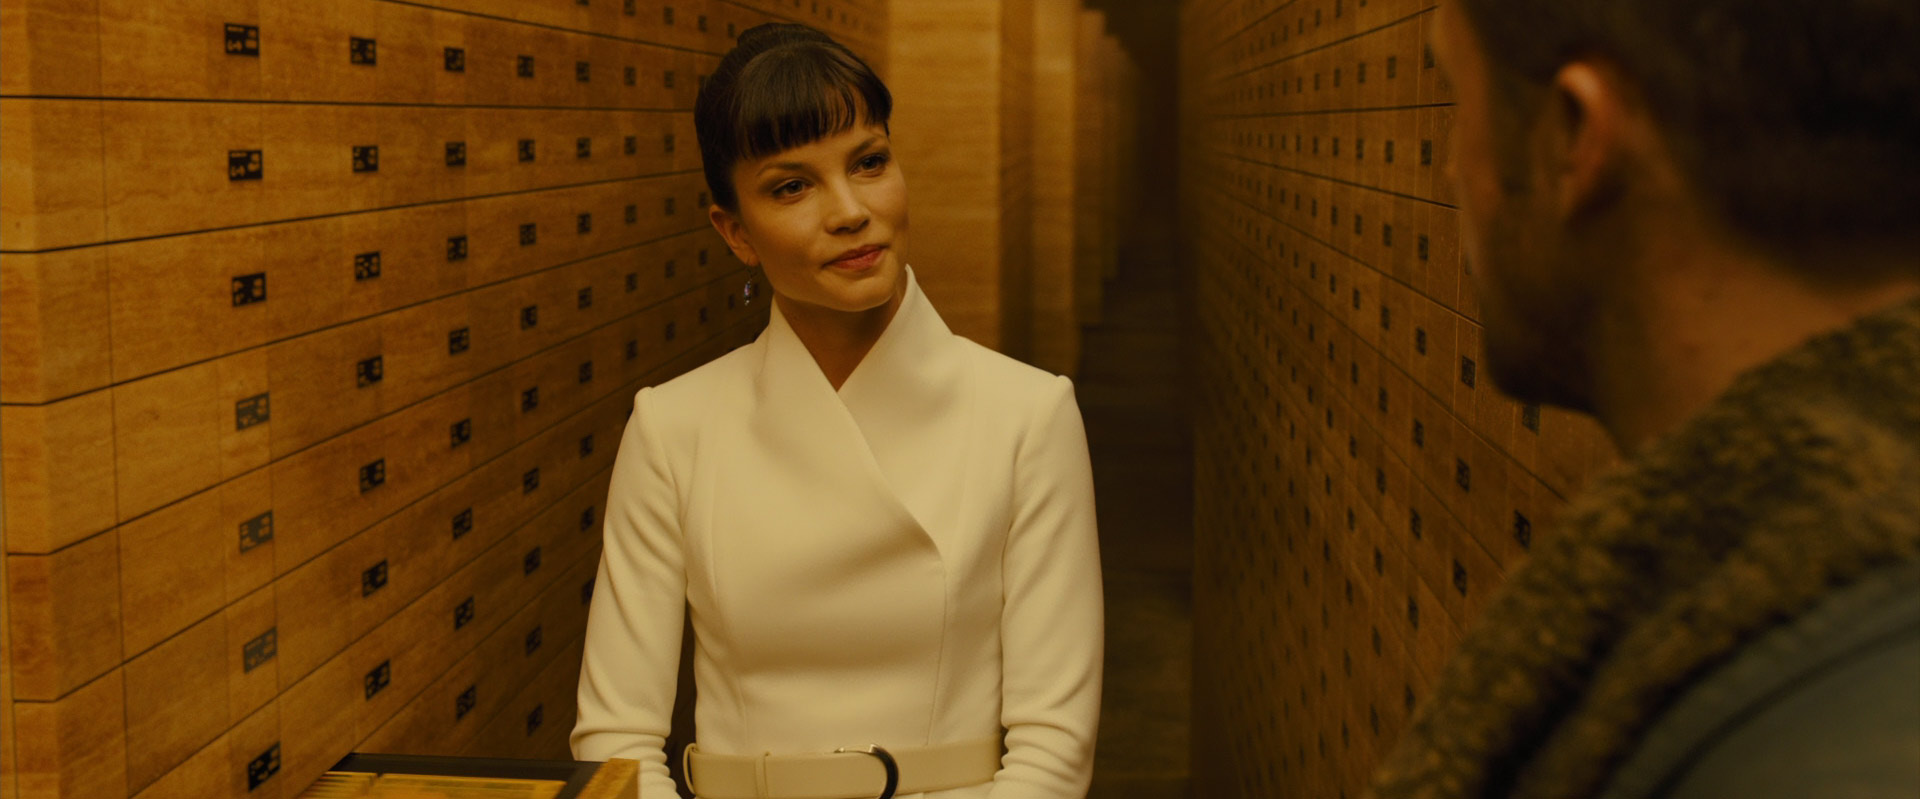 Sylvia Hoeks in Blade Runner 2049